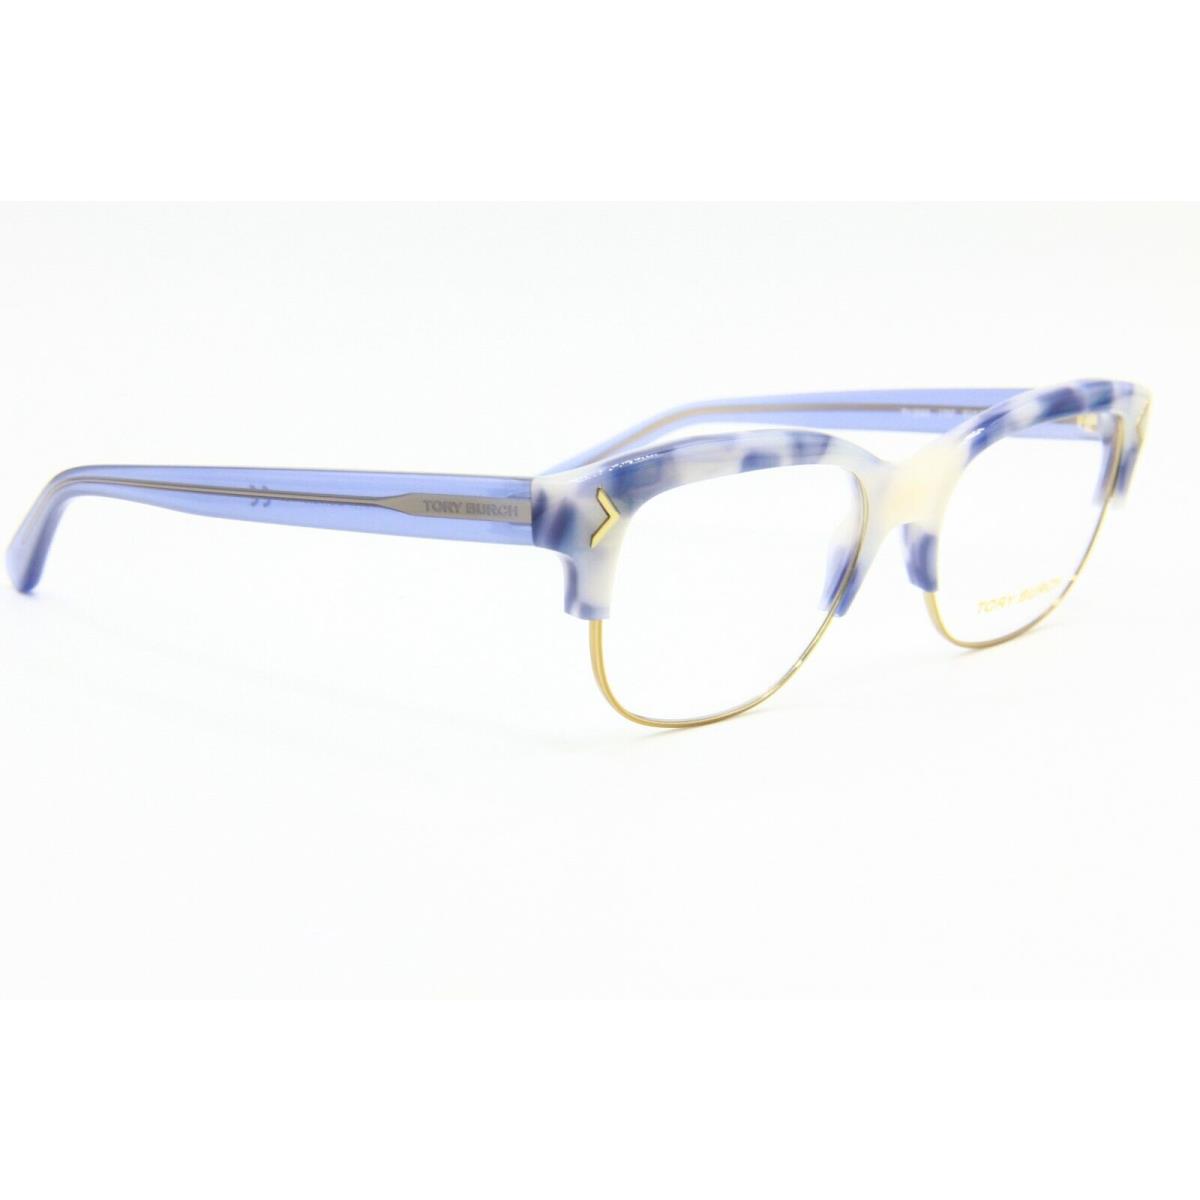 Tory Burch eyeglasses  - Blue Frame 1